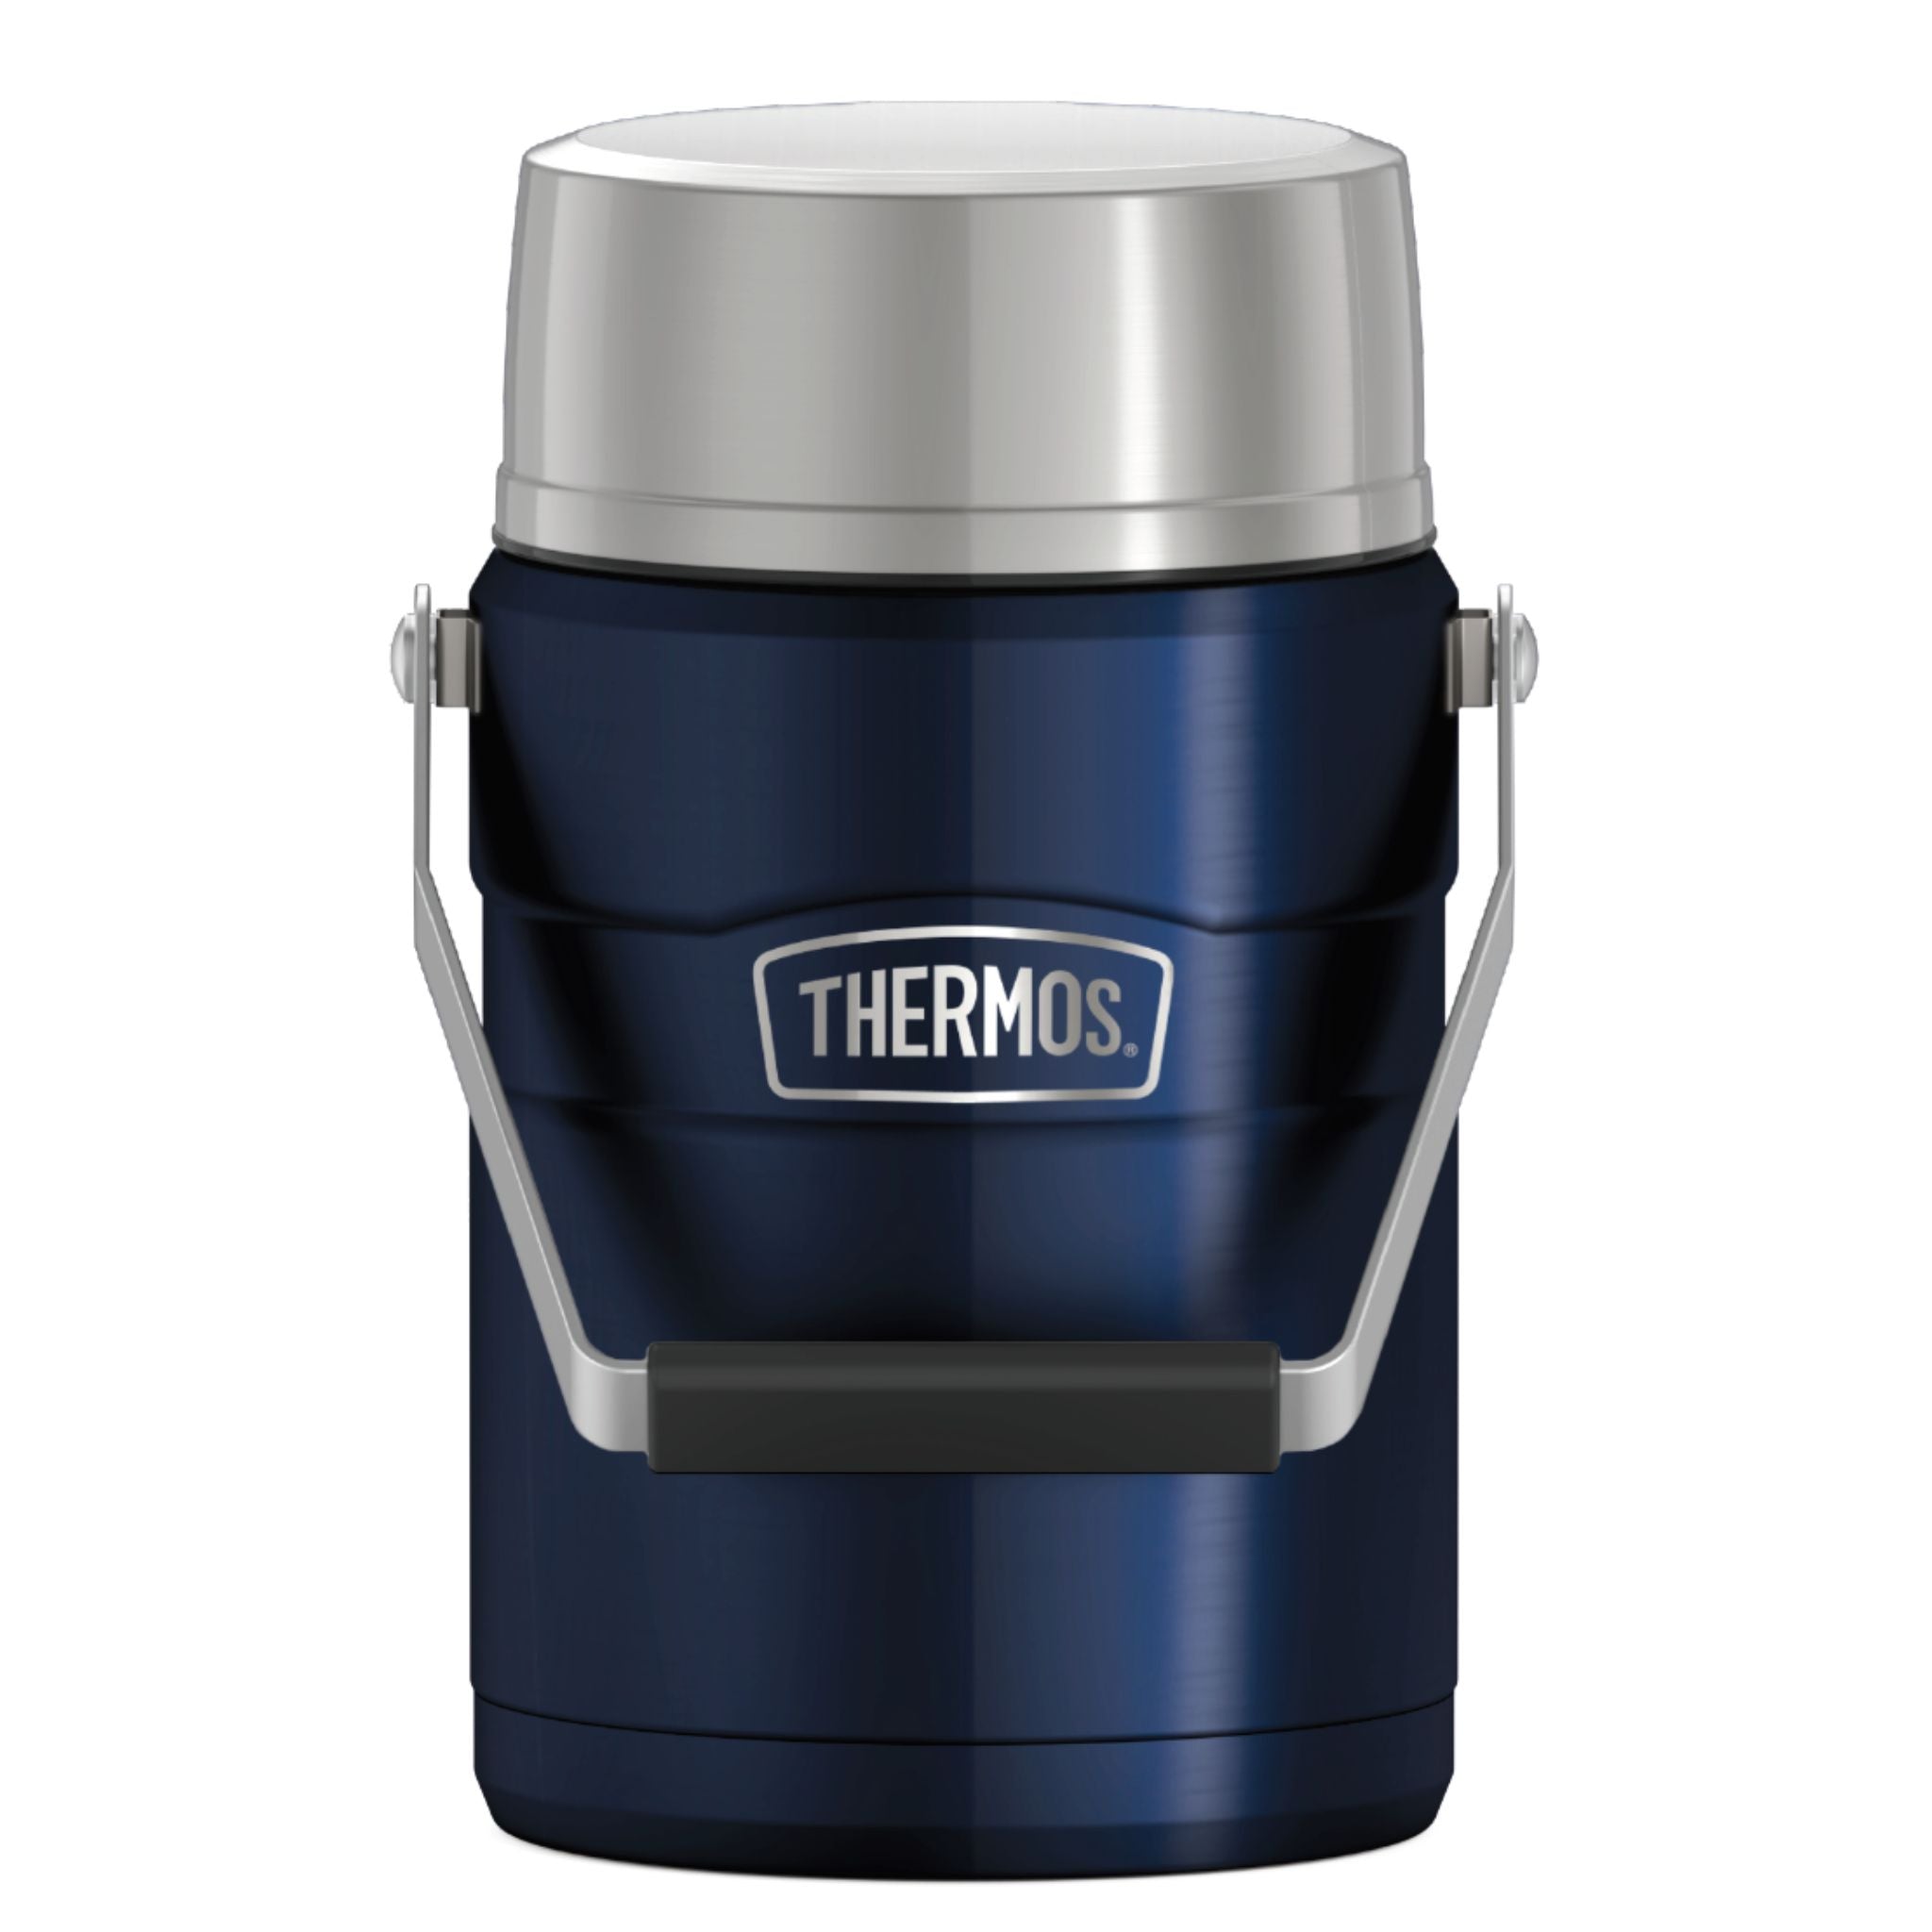 THERMOS 1.39L Stainless Steel King Big Food Jar - Midnight Blue (SK-3030 MB)